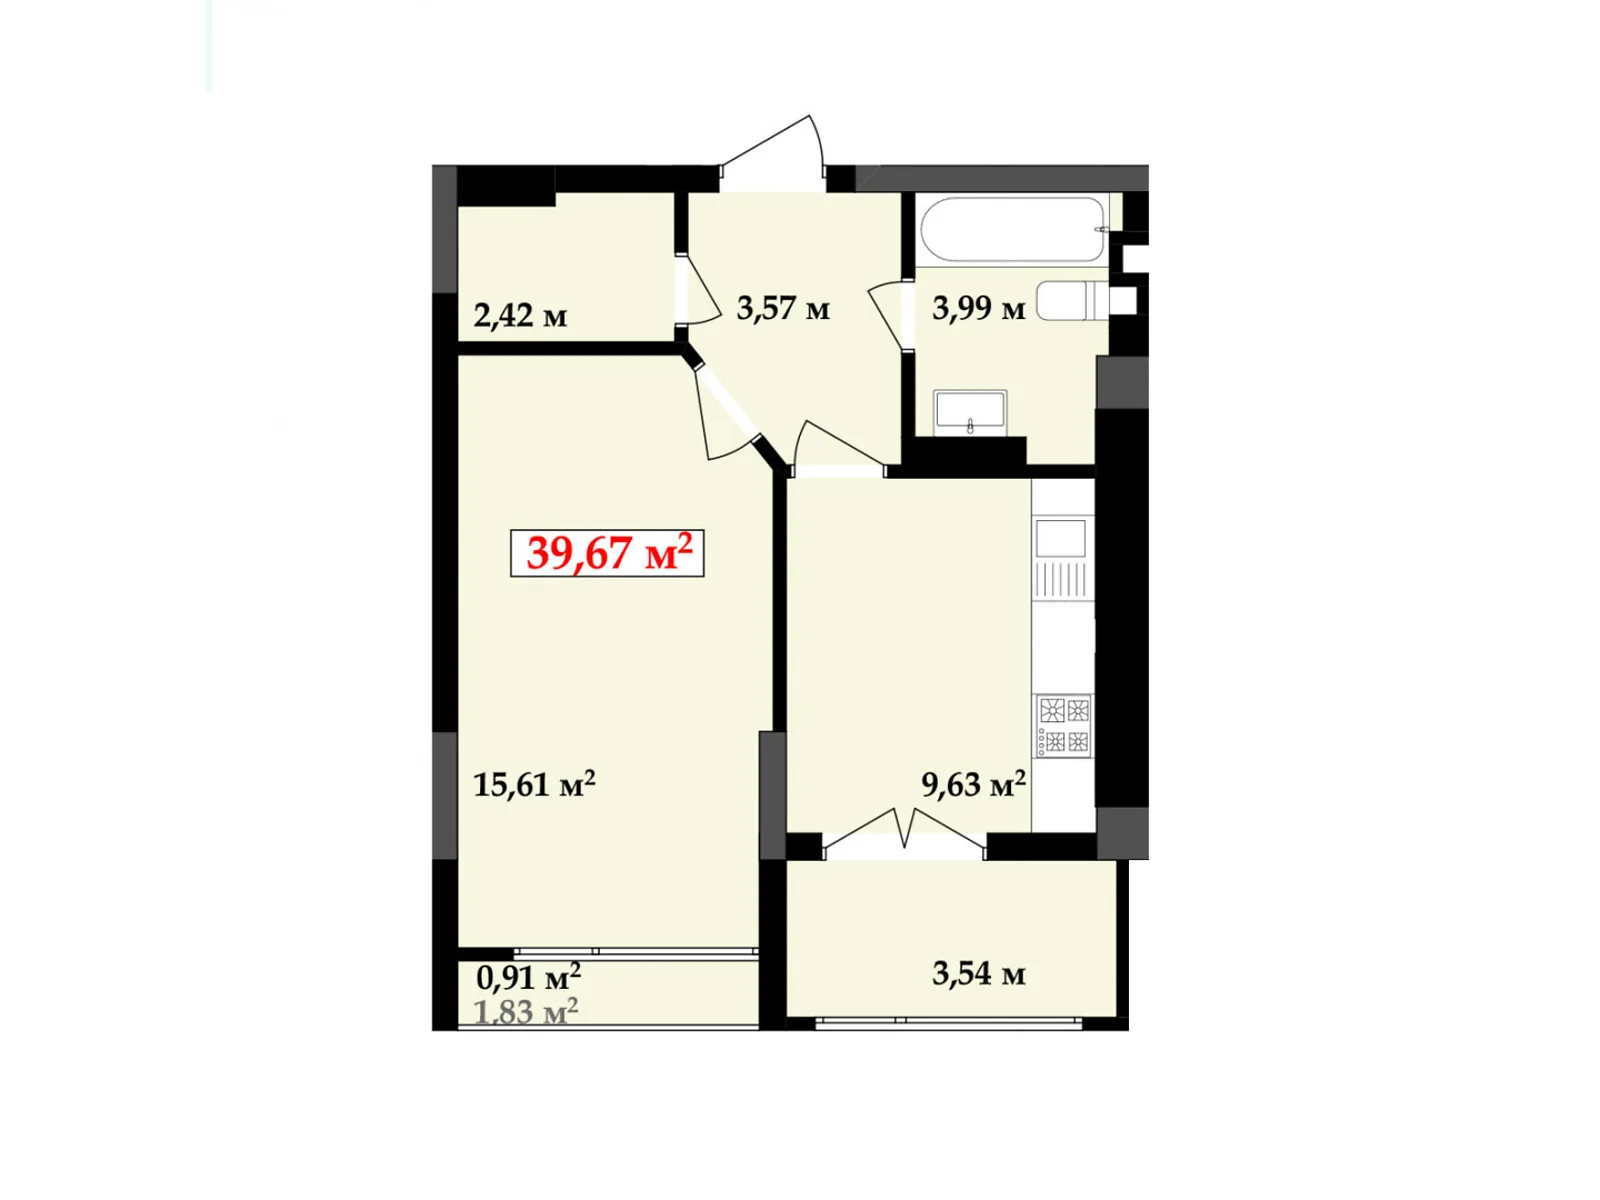 Продается 1-комнатная квартира 39.67 кв. м в Ивано-Франковске, цена: 35900 грн